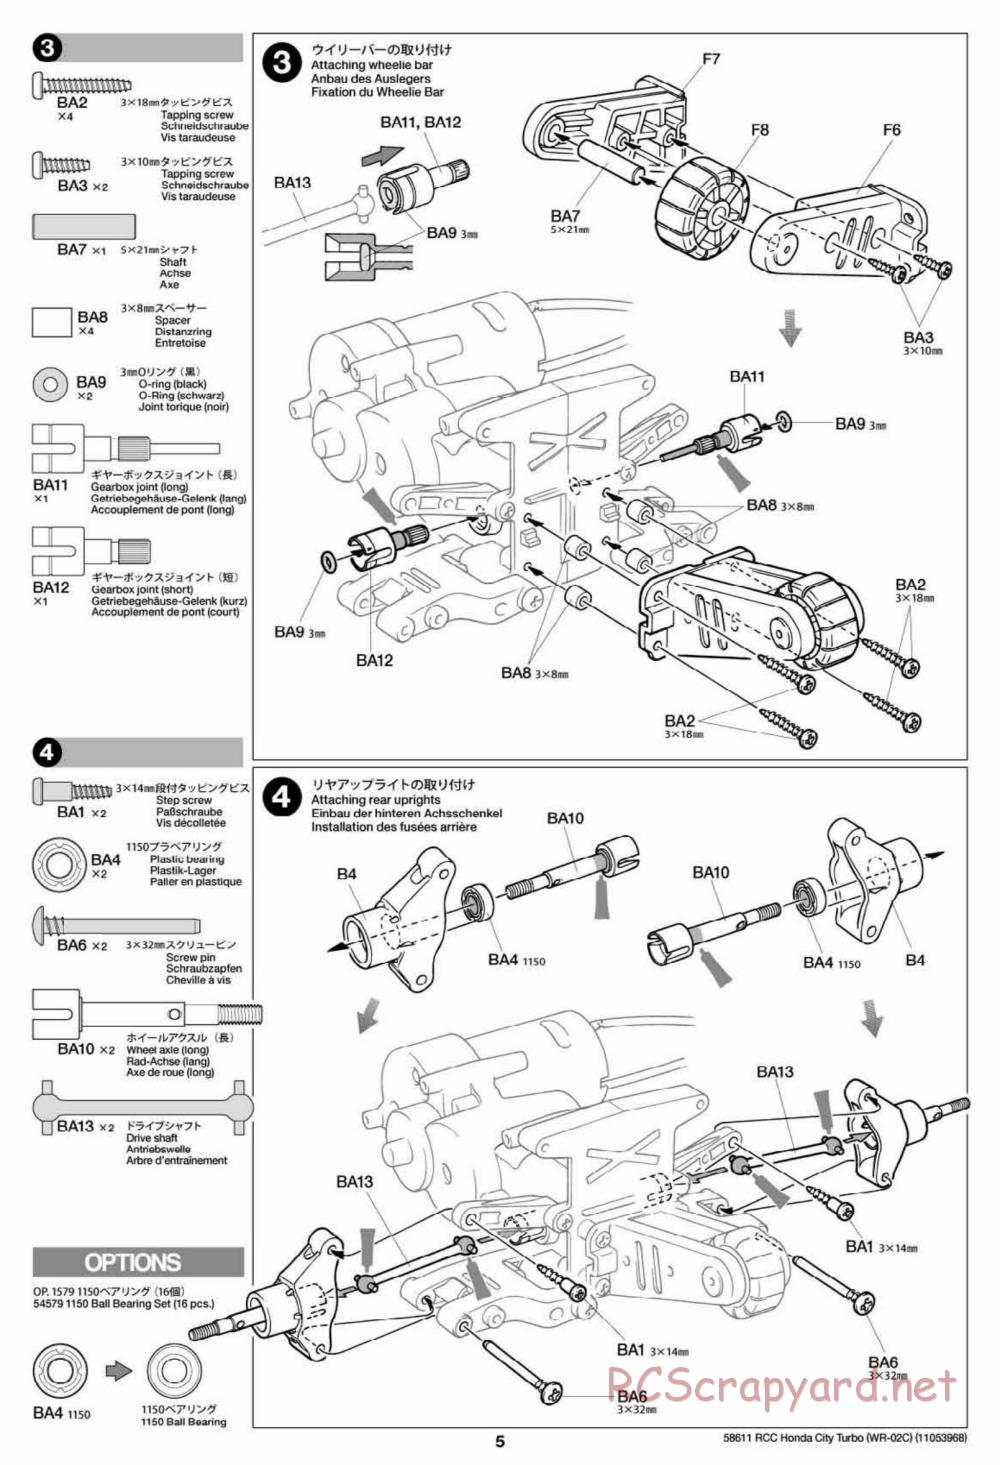 Tamiya - WR-02C Chassis - Manual - Page 5